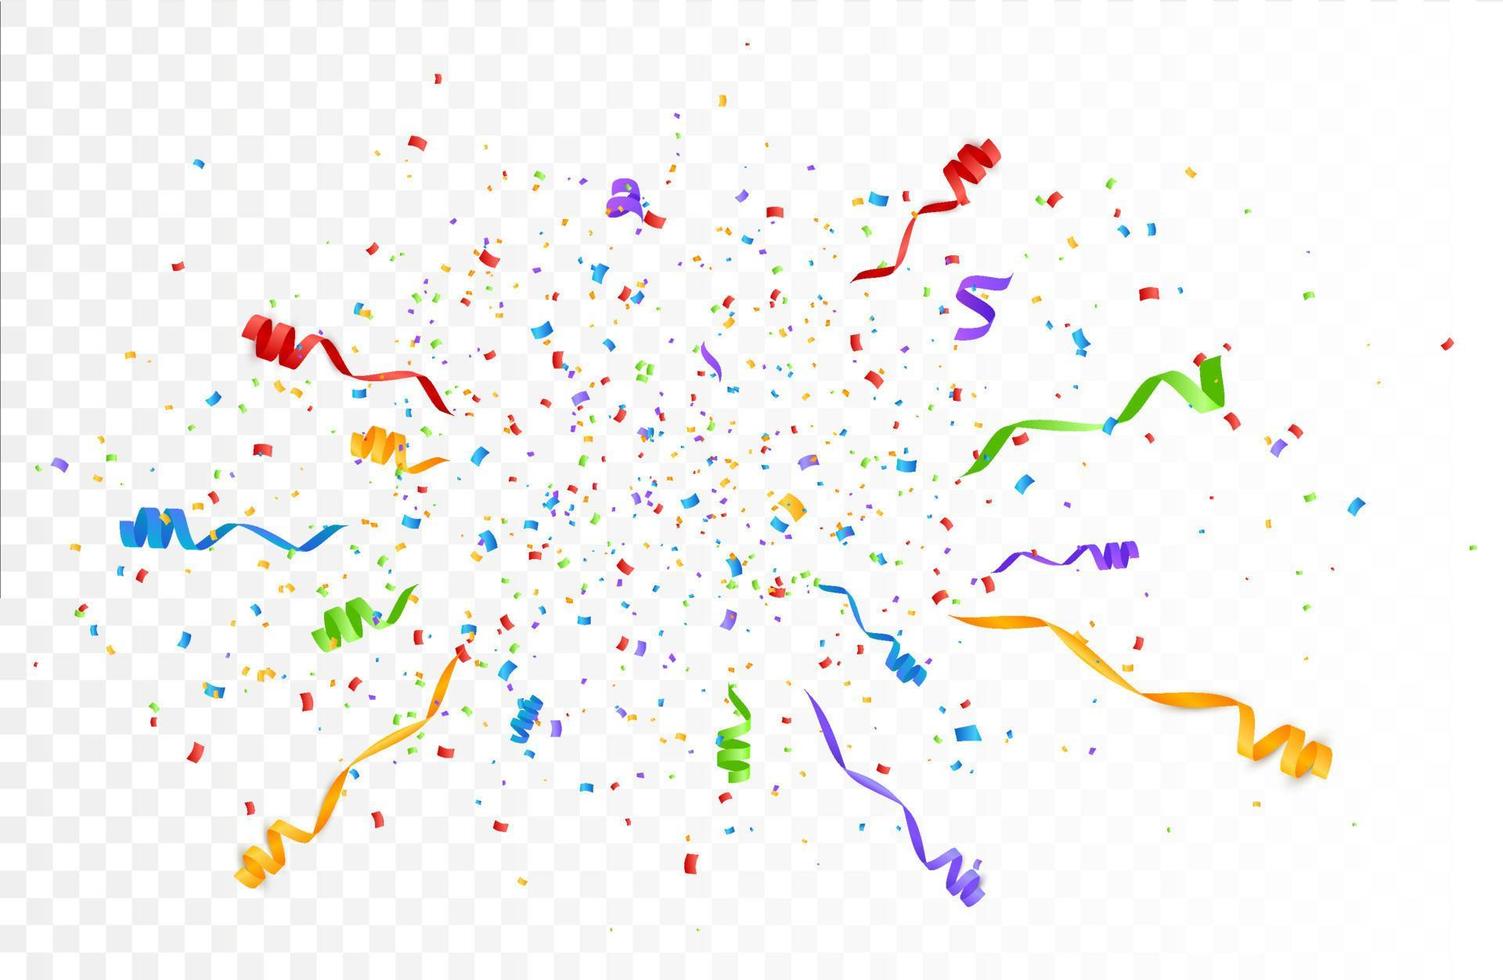 Colorful confetti isolated. Festive vector background